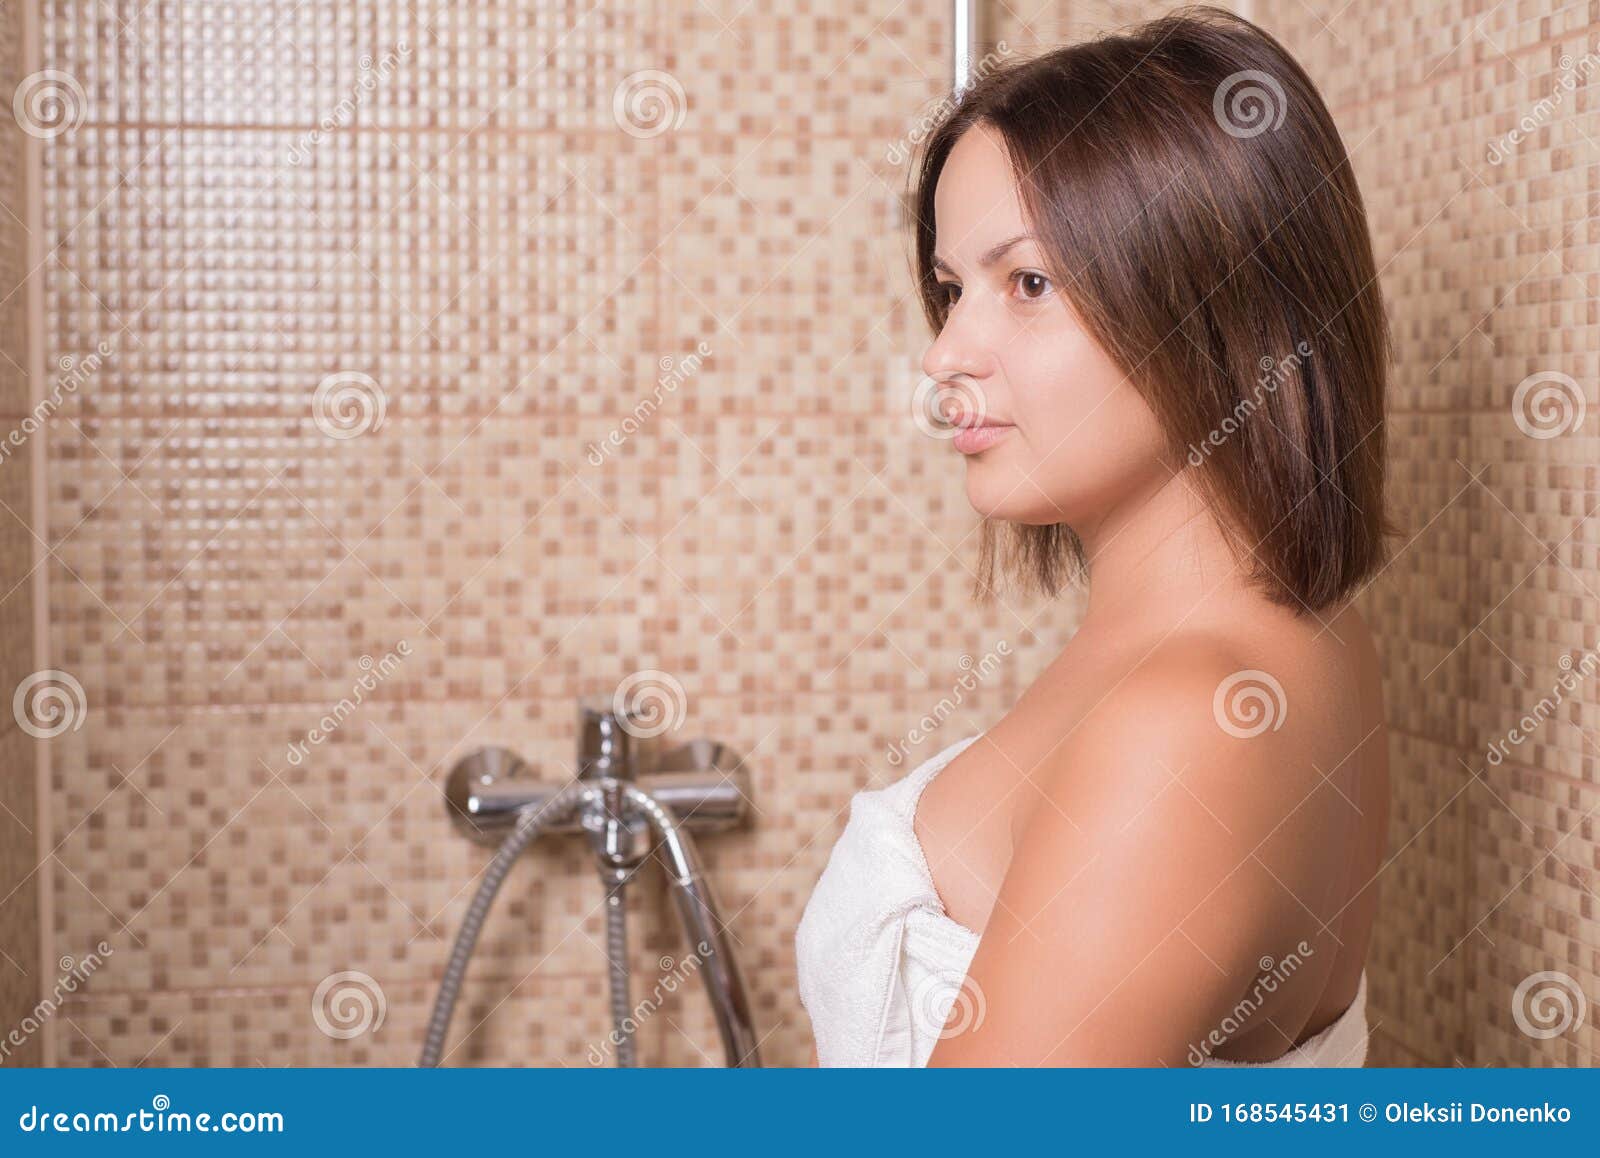 shower sex in bathroom